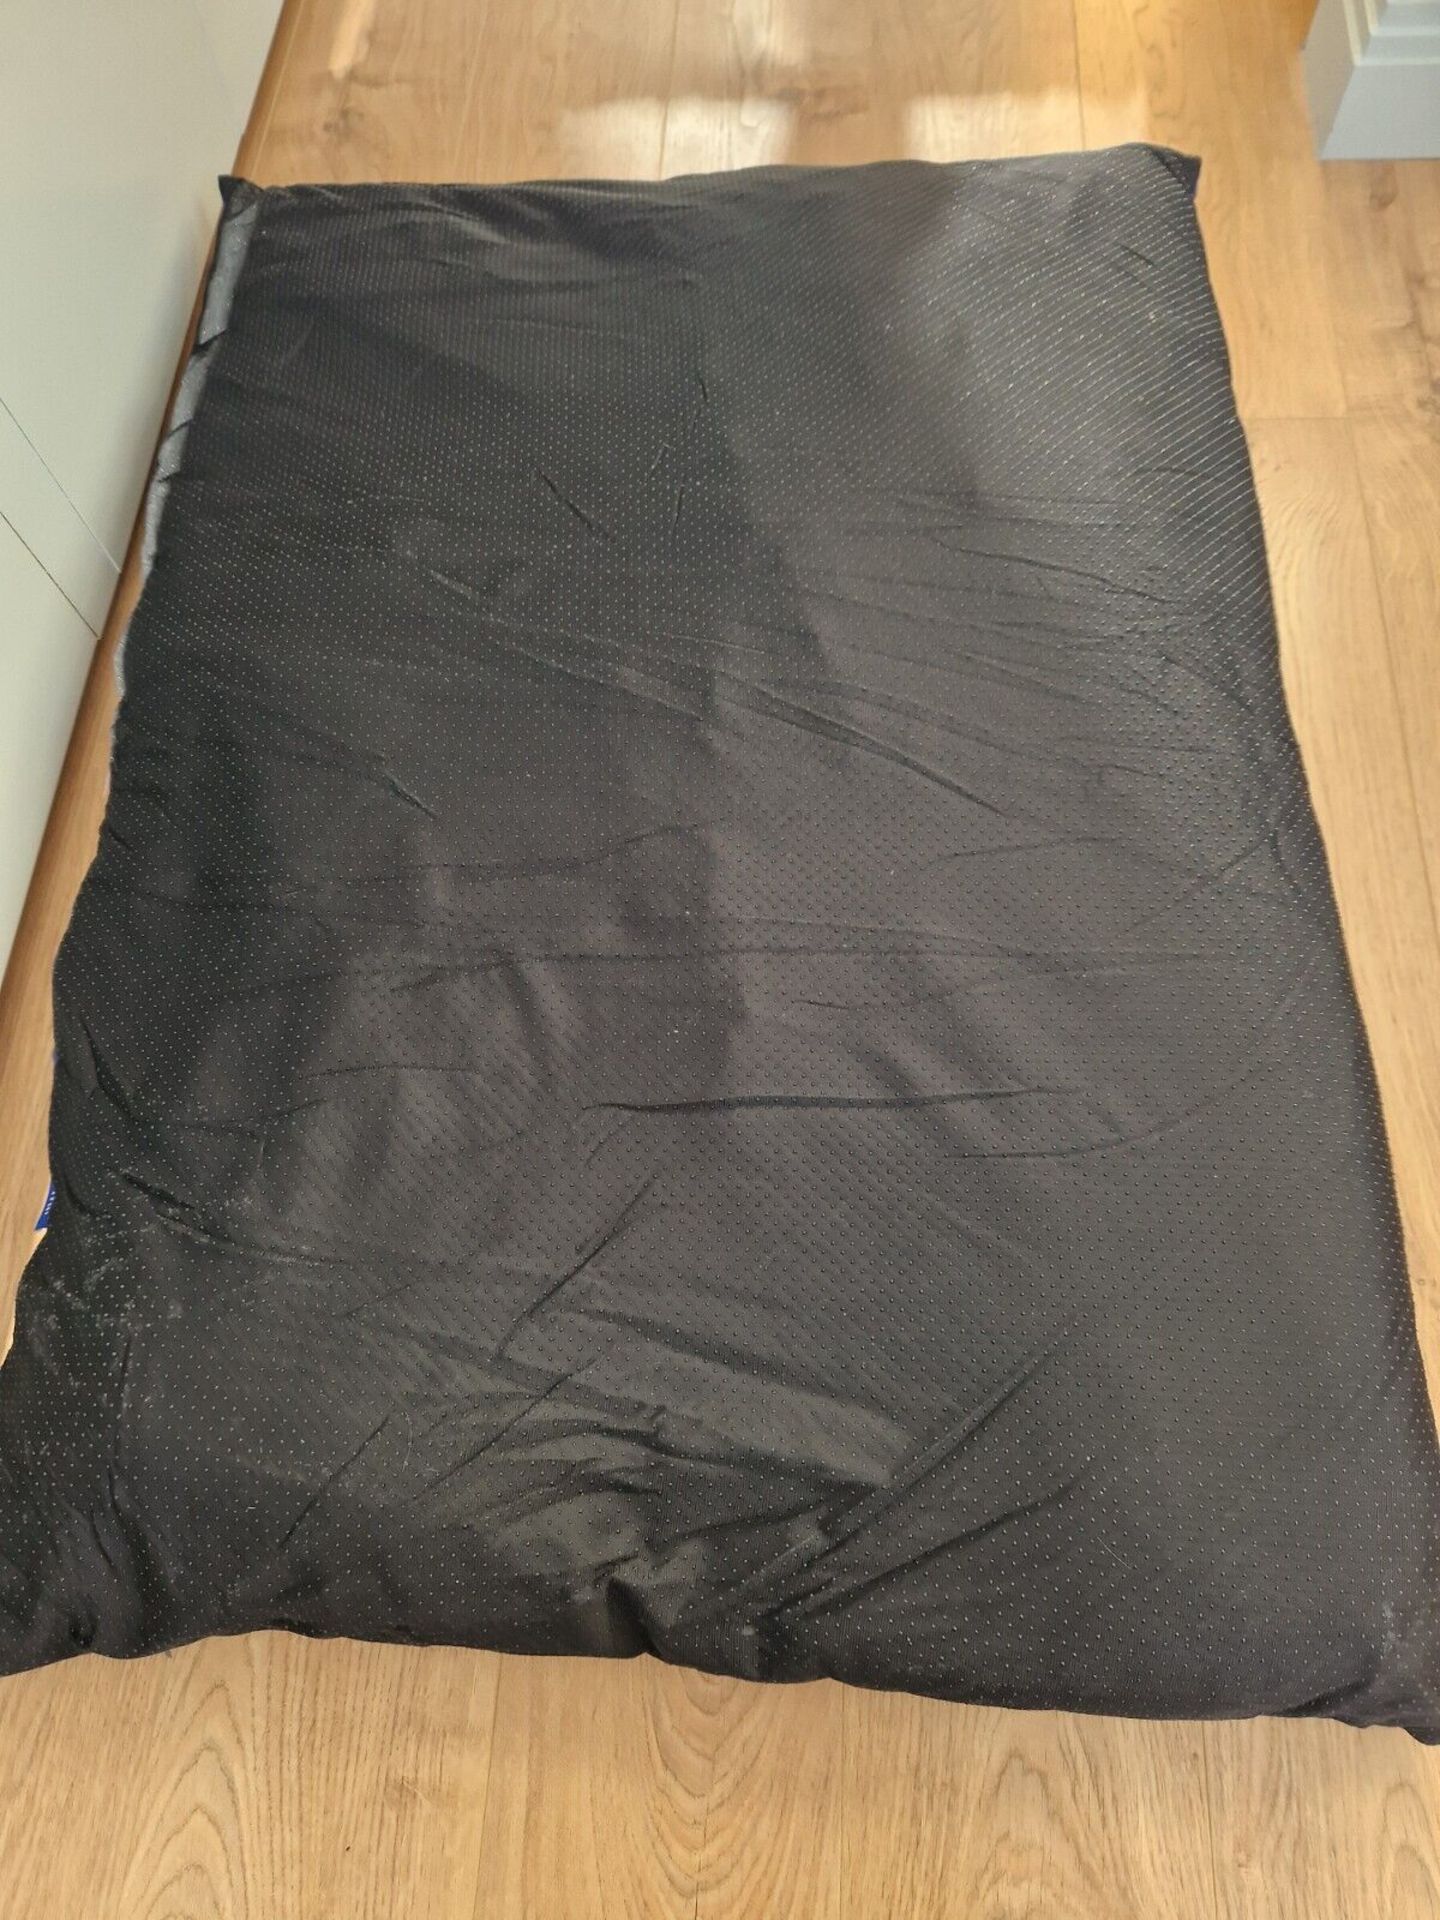 10x Snoozzzeee Cushion Bed, Navy, 85 x 120cm - RRP £700 - Bild 2 aus 5